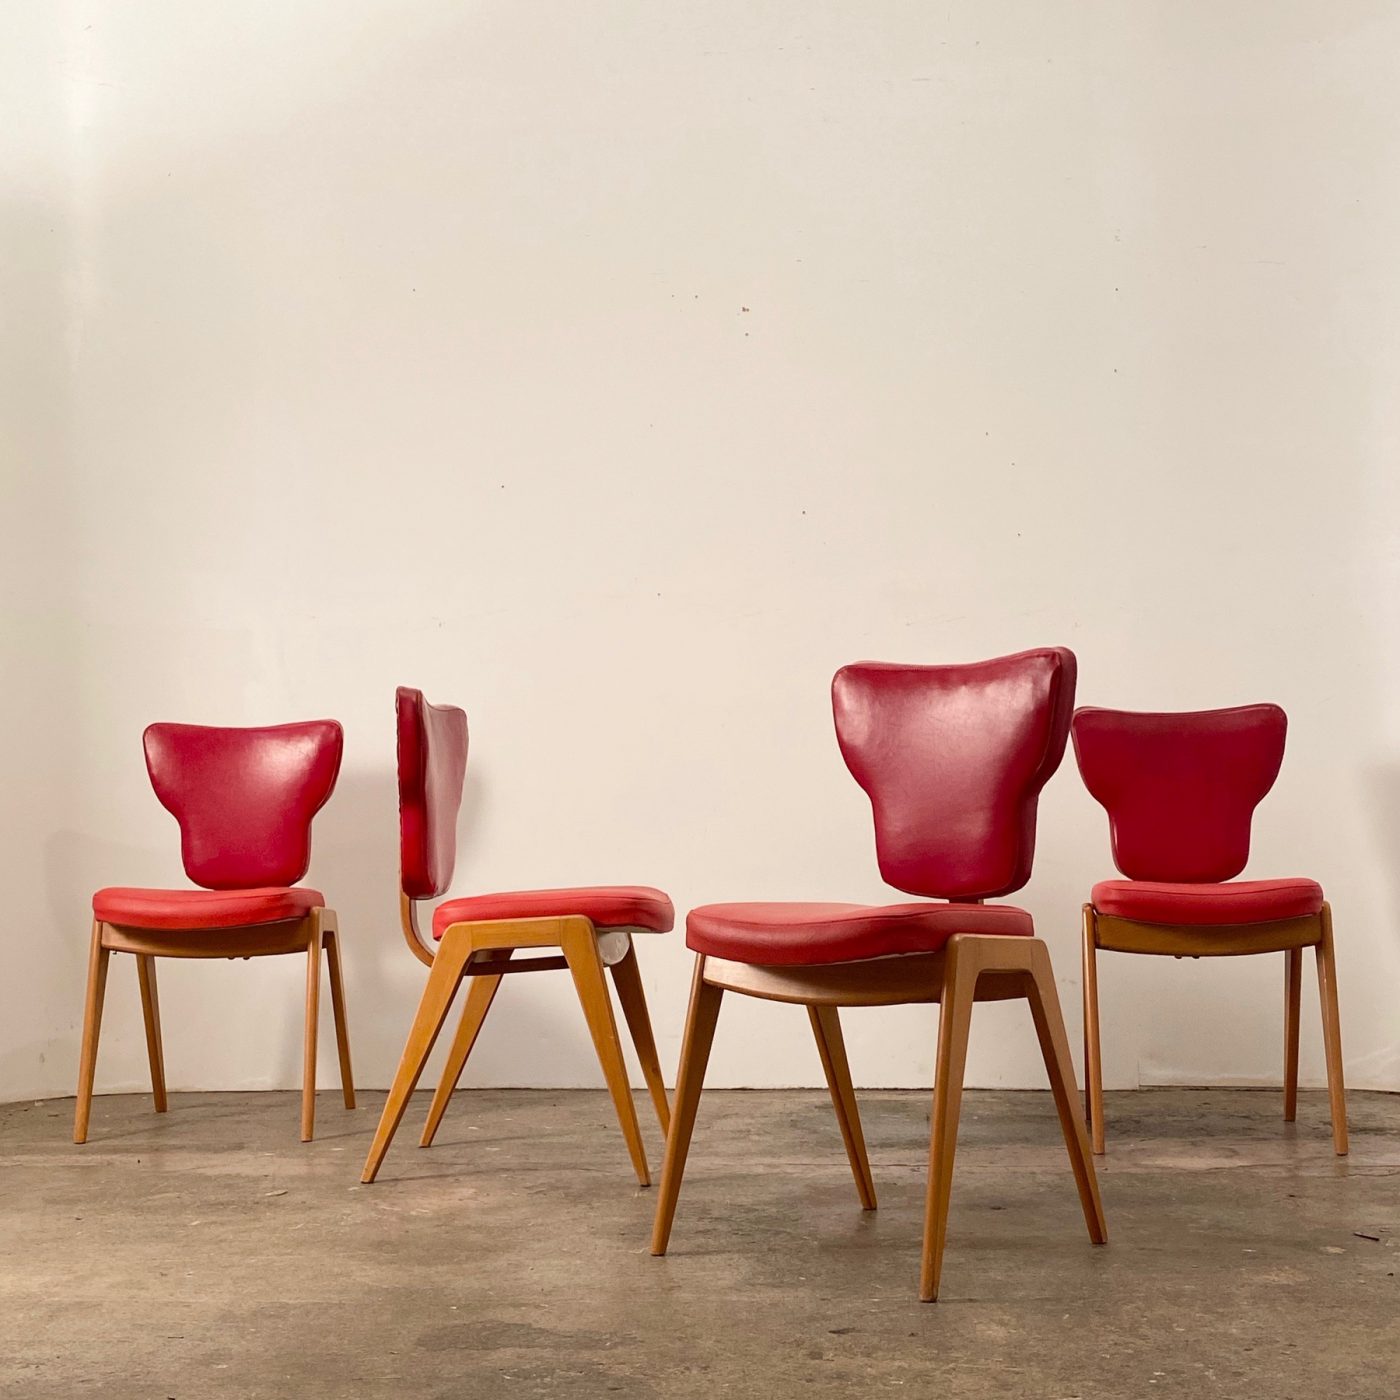 objet-vagabond-vintage-chairs0006